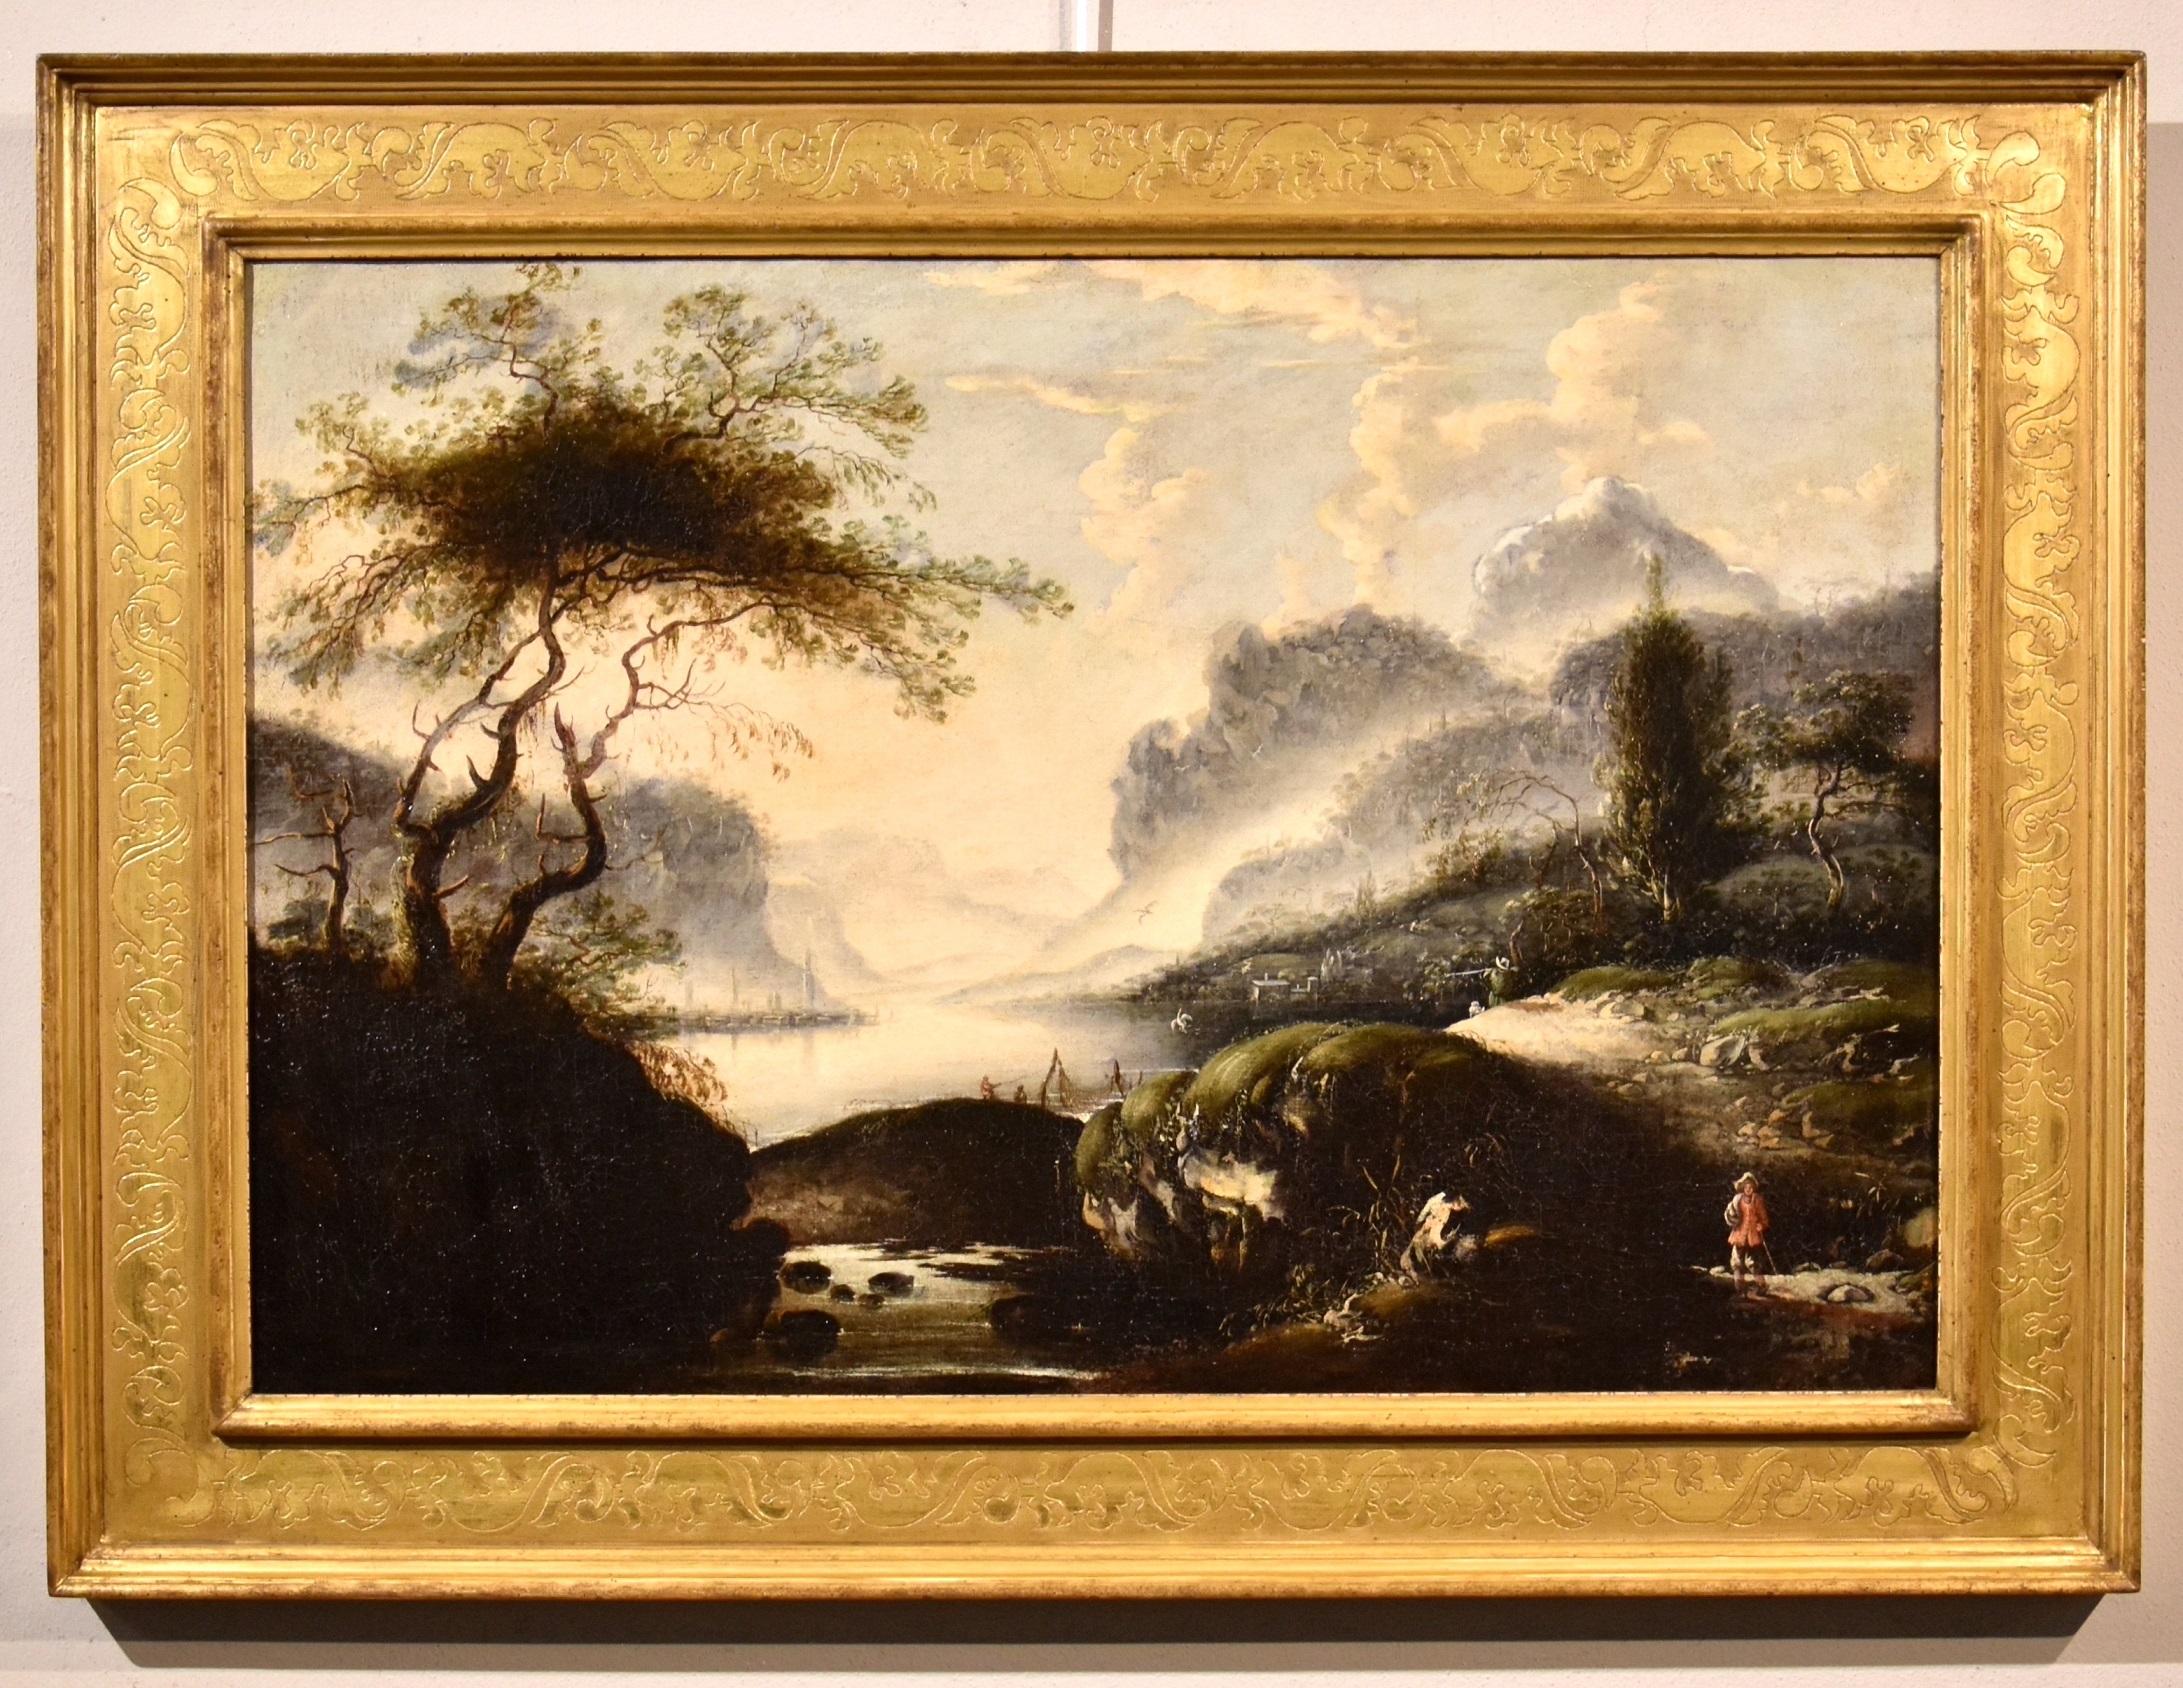 Hans de Jode (The Hague, 1630 - Vienna, 1663) Landscape Painting – De Jode Winter Landschaftsgemälde Öl auf Leinwand Alter Meister 17. Jahrhundert Flämische Kunst